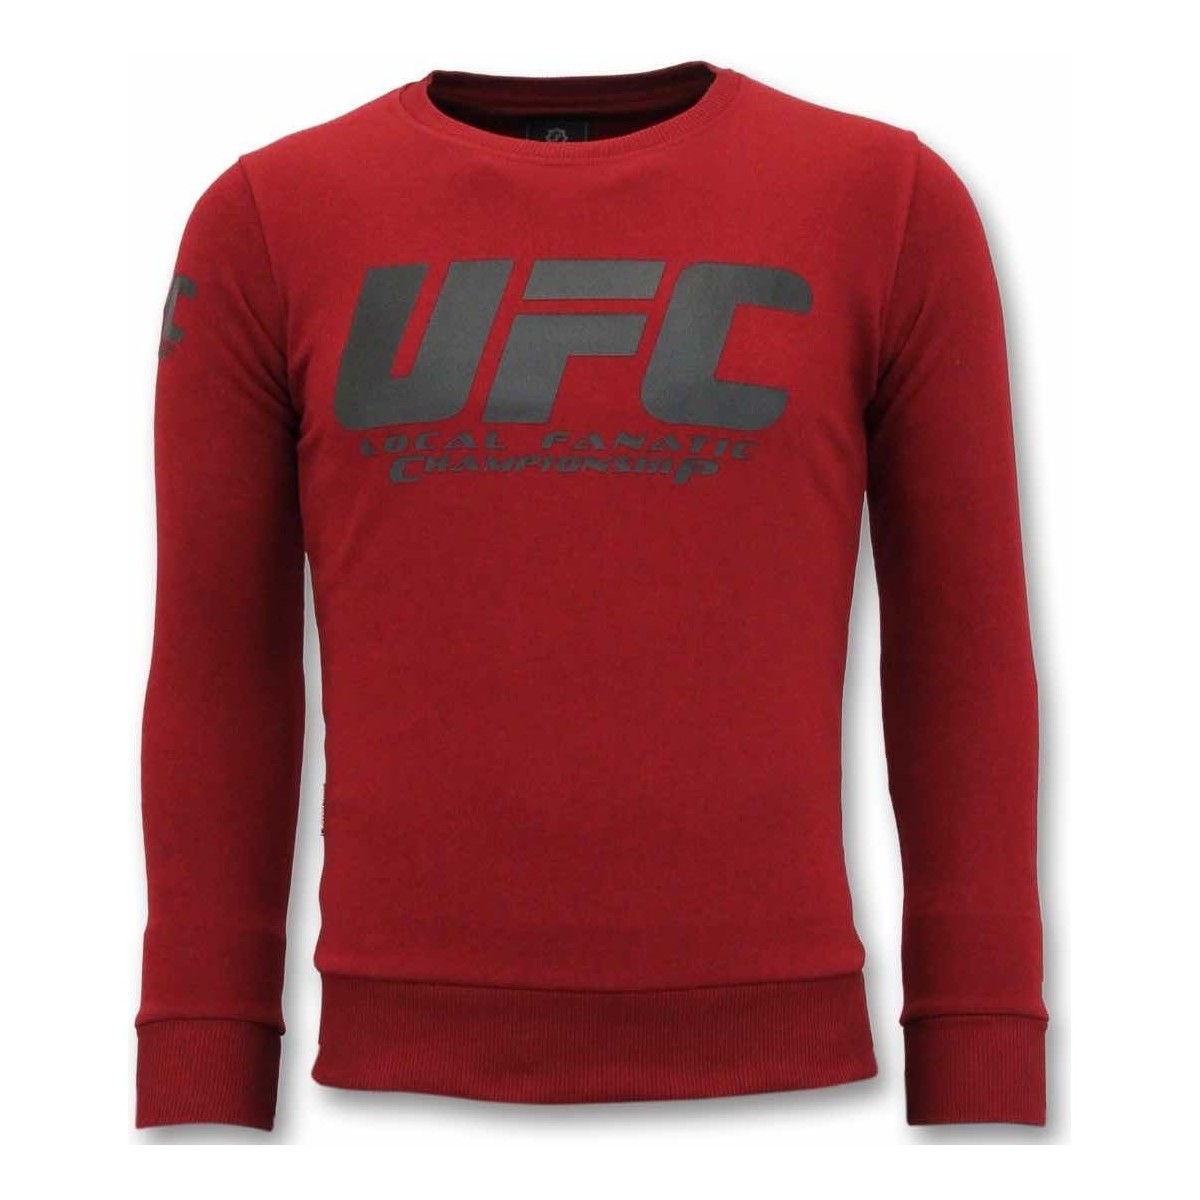 Textiel Heren Sweaters / Sweatshirts Local Fanatic UFC Championship Rood